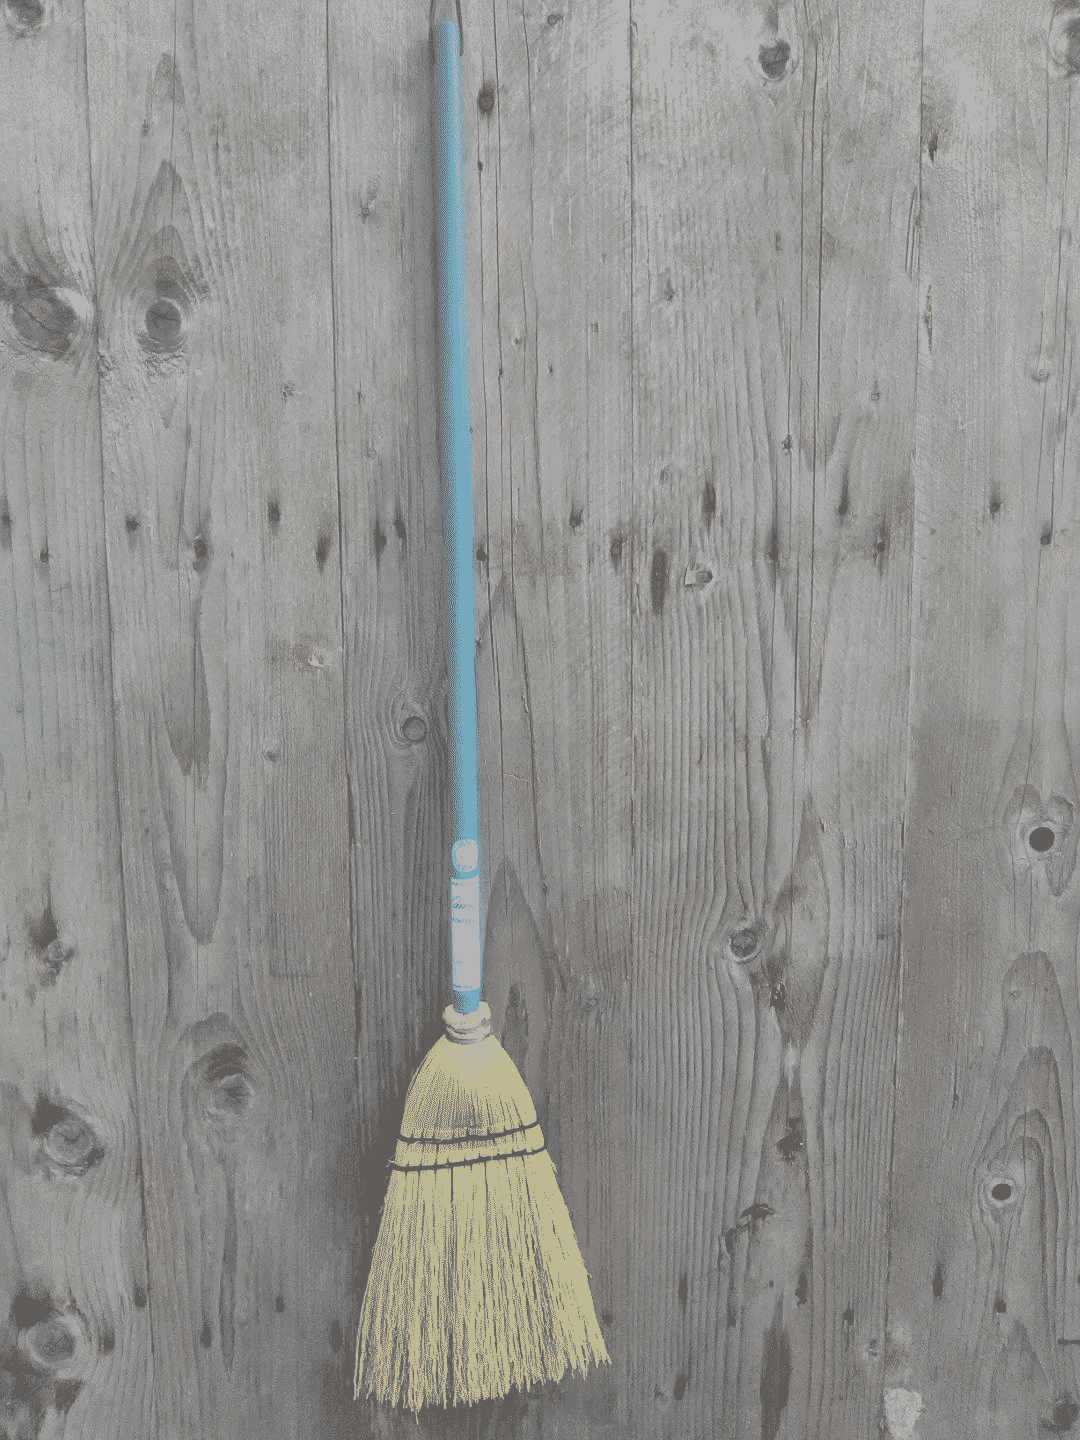 Lobby broom - plain